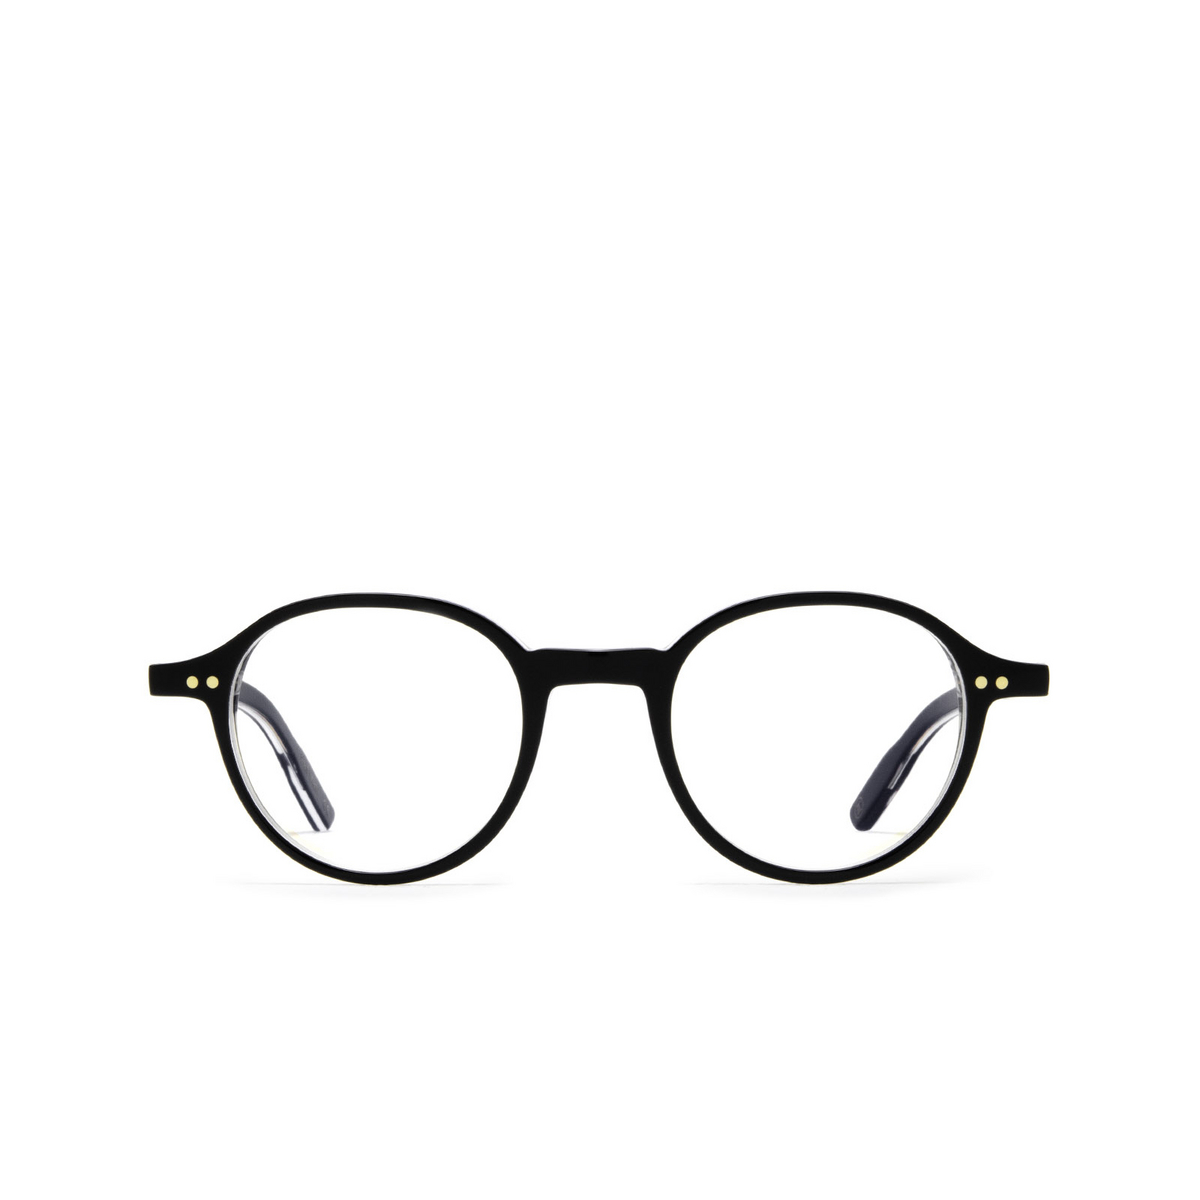 Lesca® Round Eyeglasses: Puno color Black / Crystal 5 - front view.